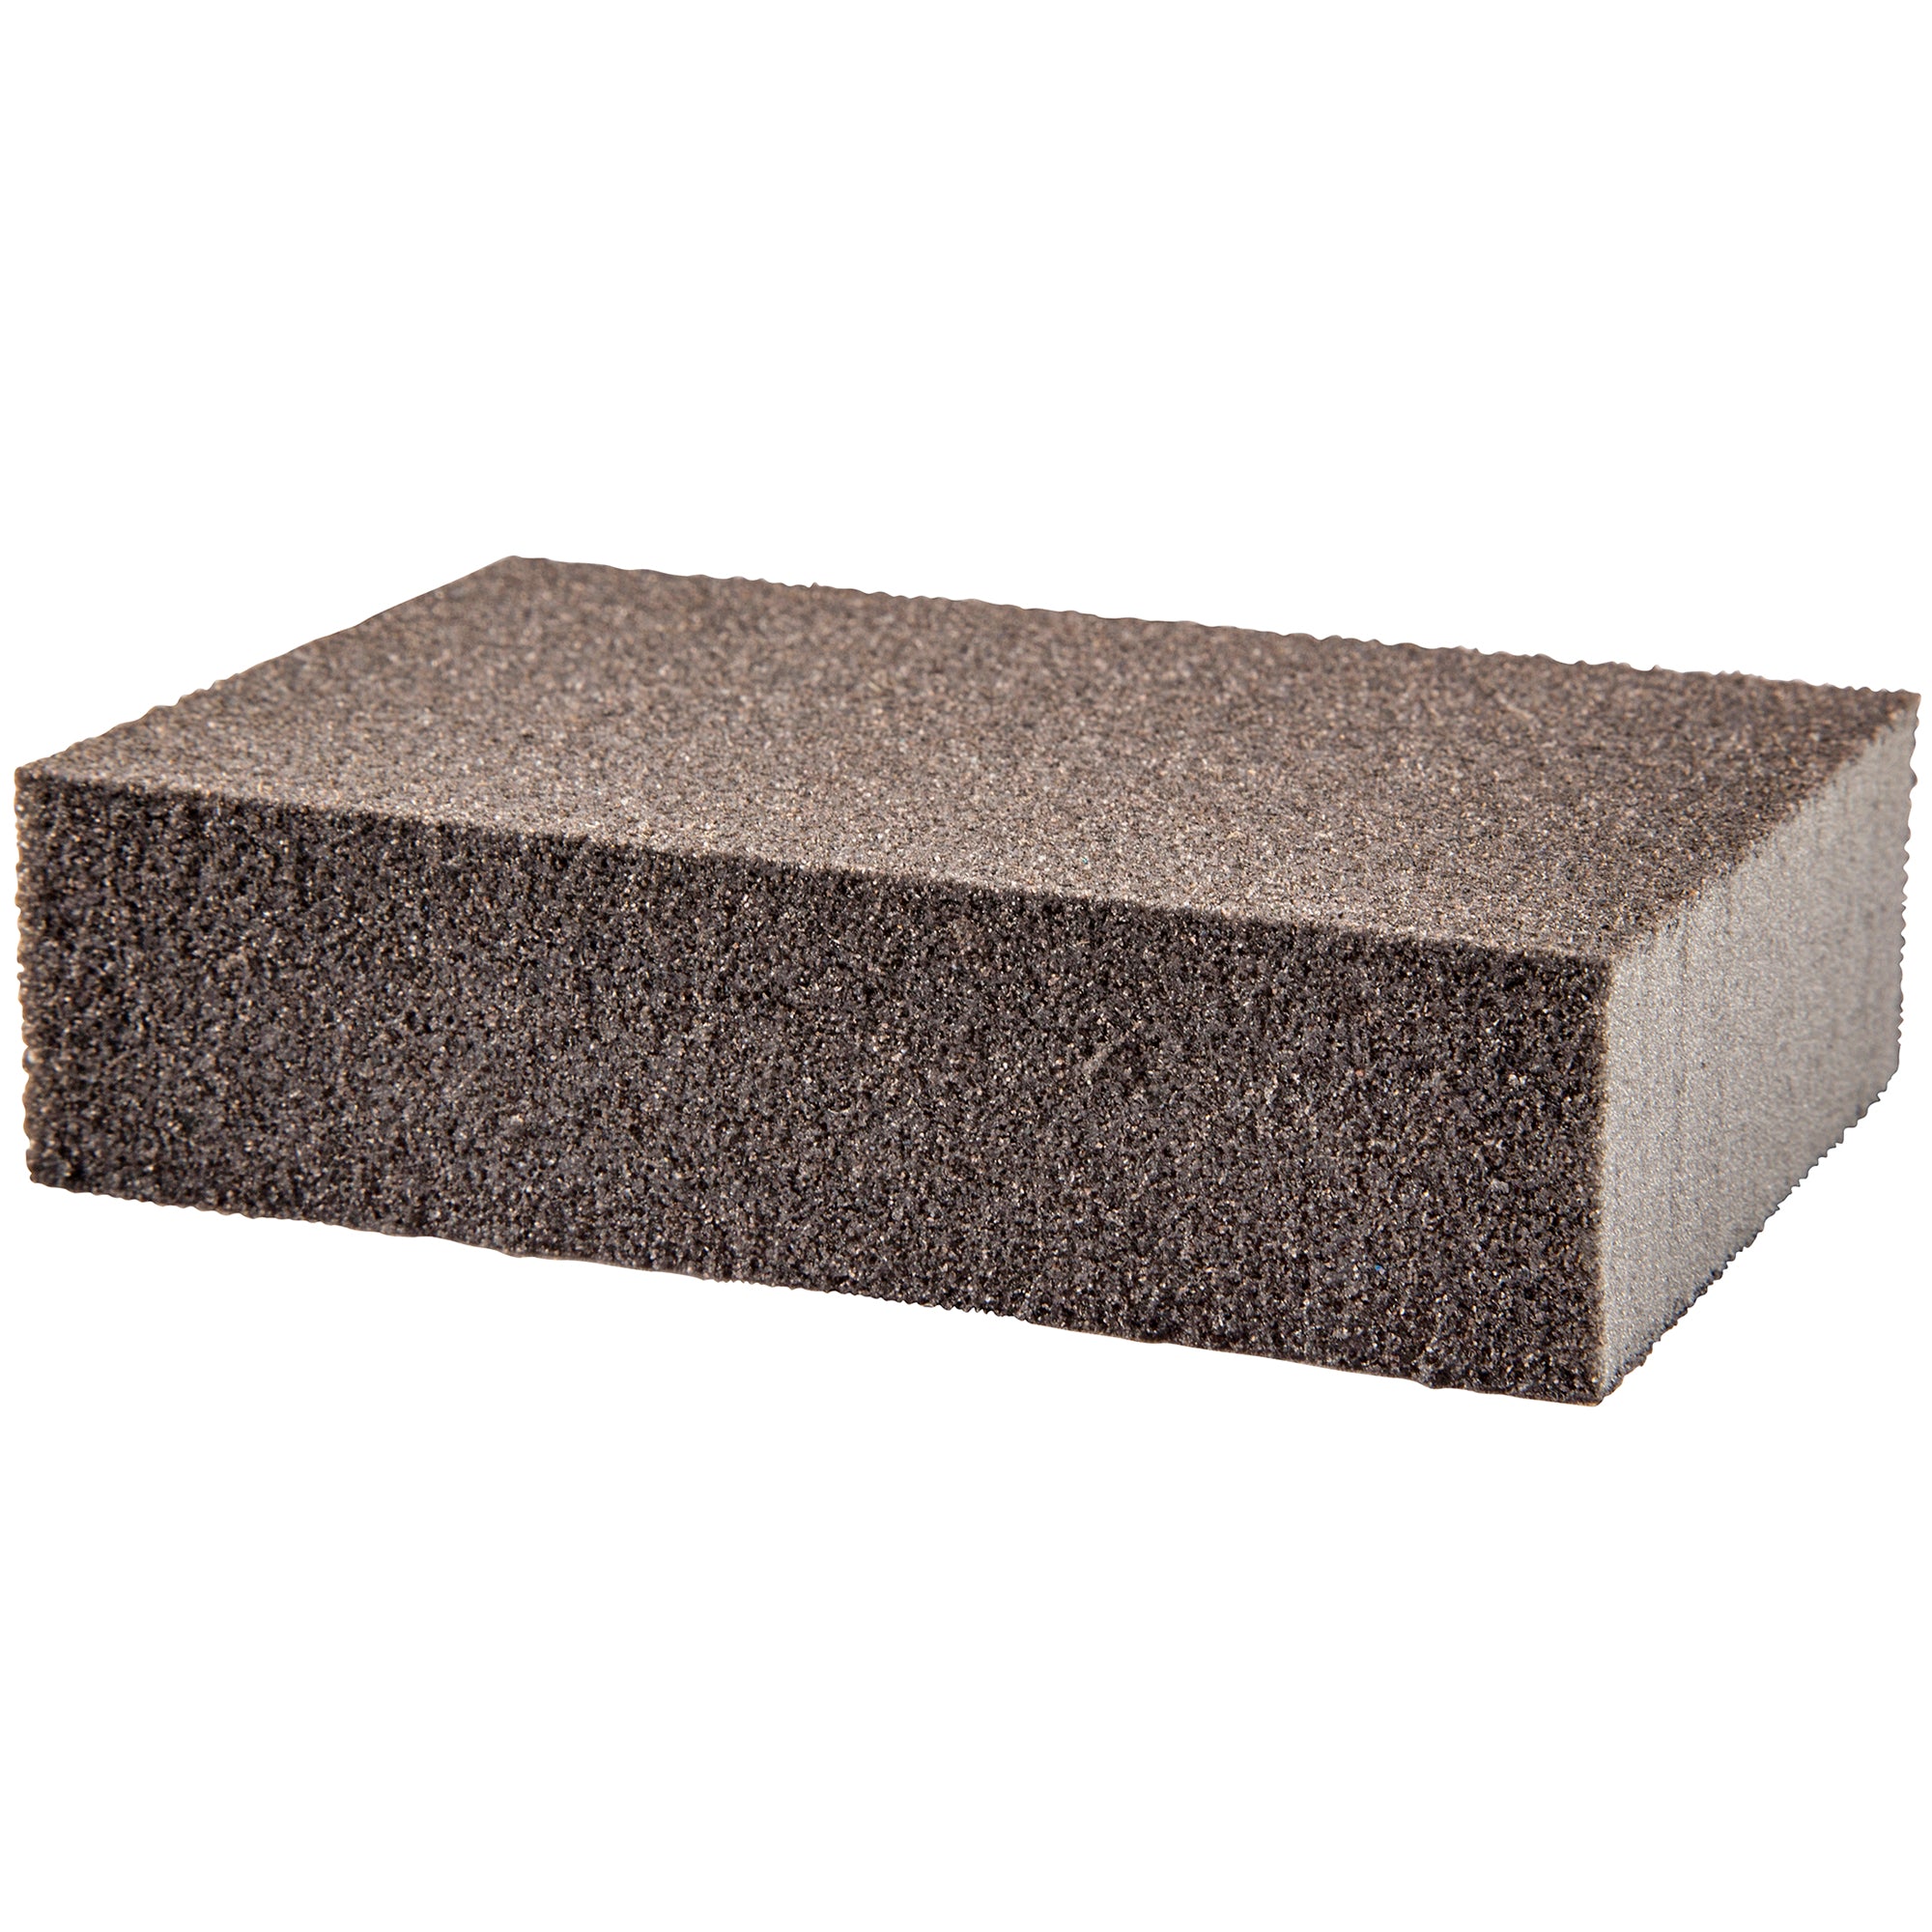 MultiSand Medium/Coarse Grit Small Area Sanding Sponge